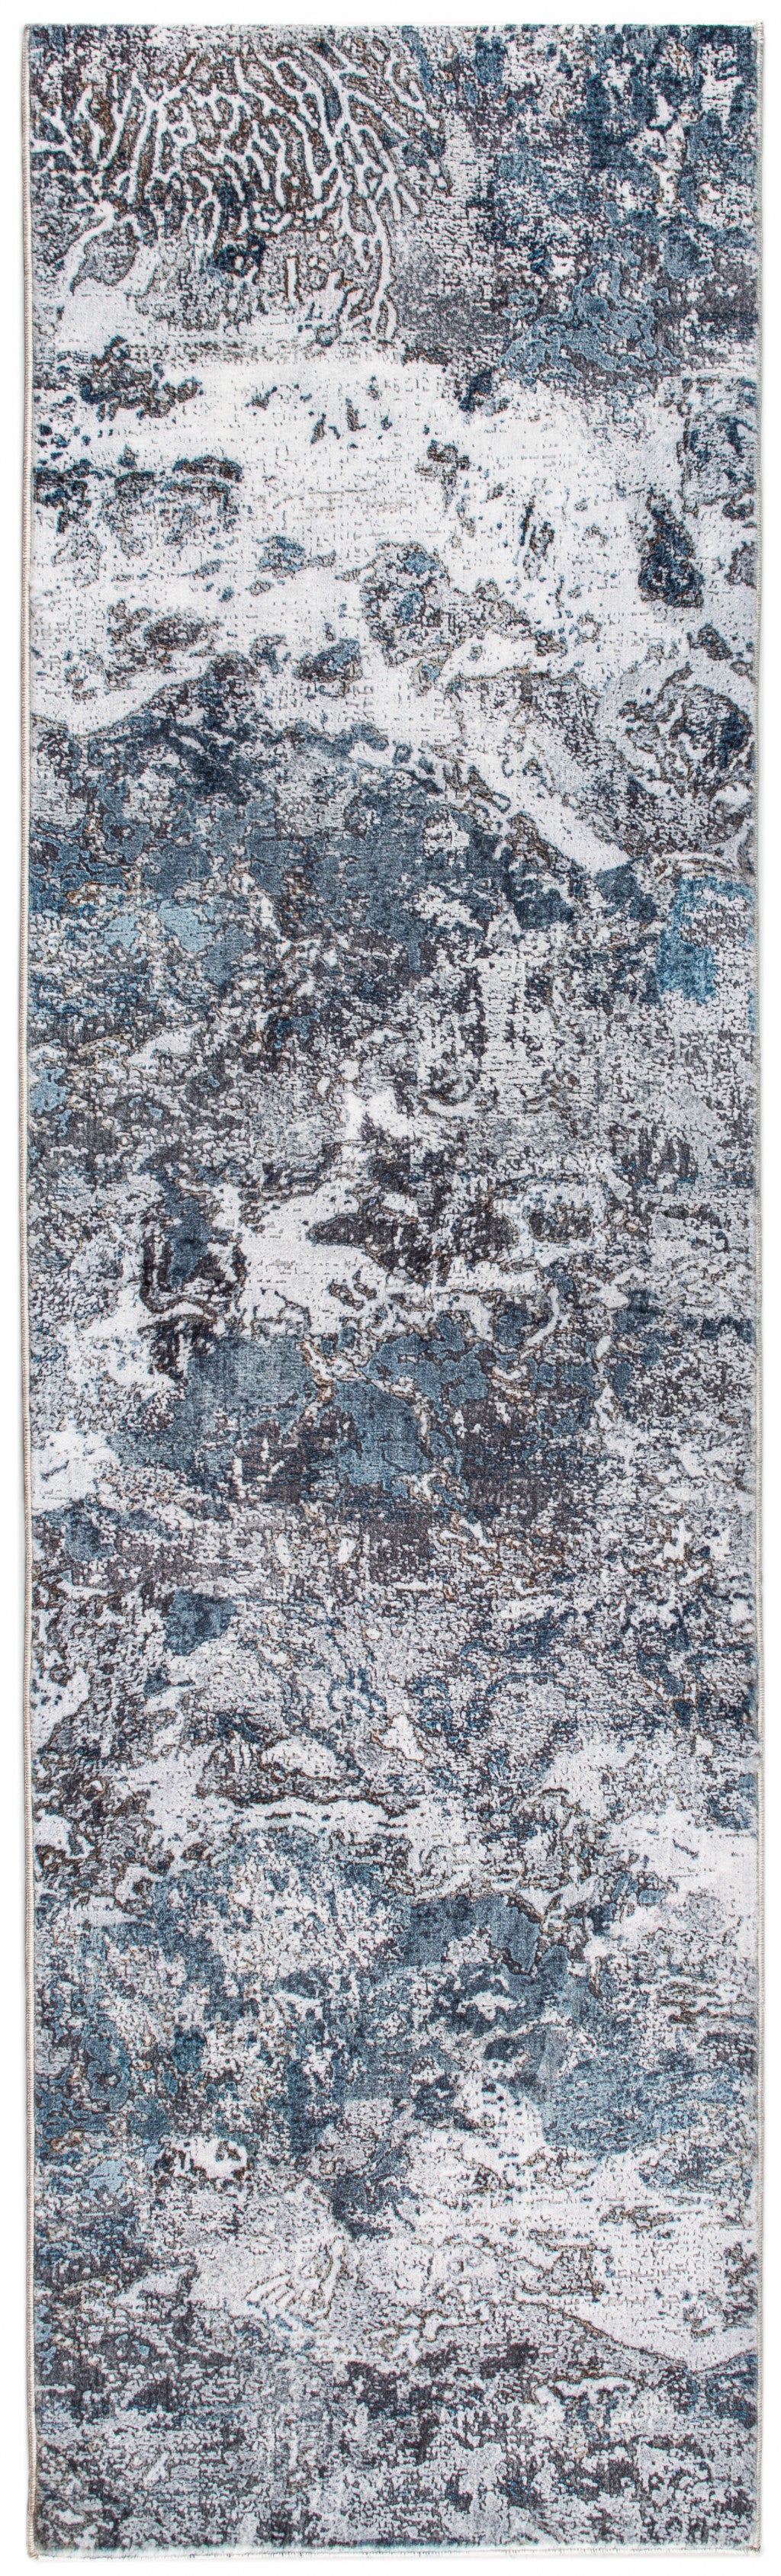 8’ x 10’ Gray Blue Abstract Galaxy Area Rug